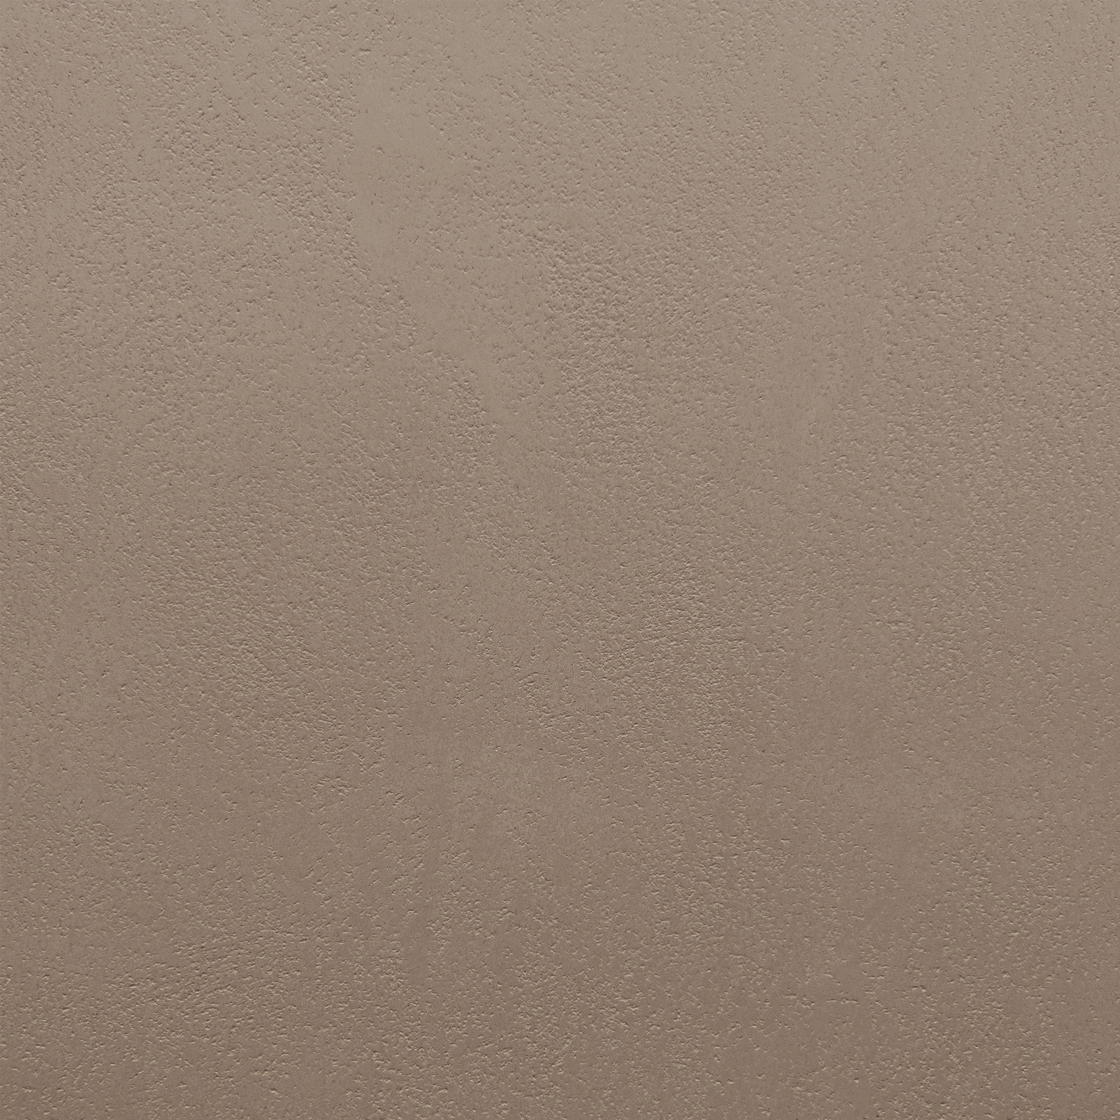 Close up of Armourcoat leatherstone exterior polished plaster finish - 32